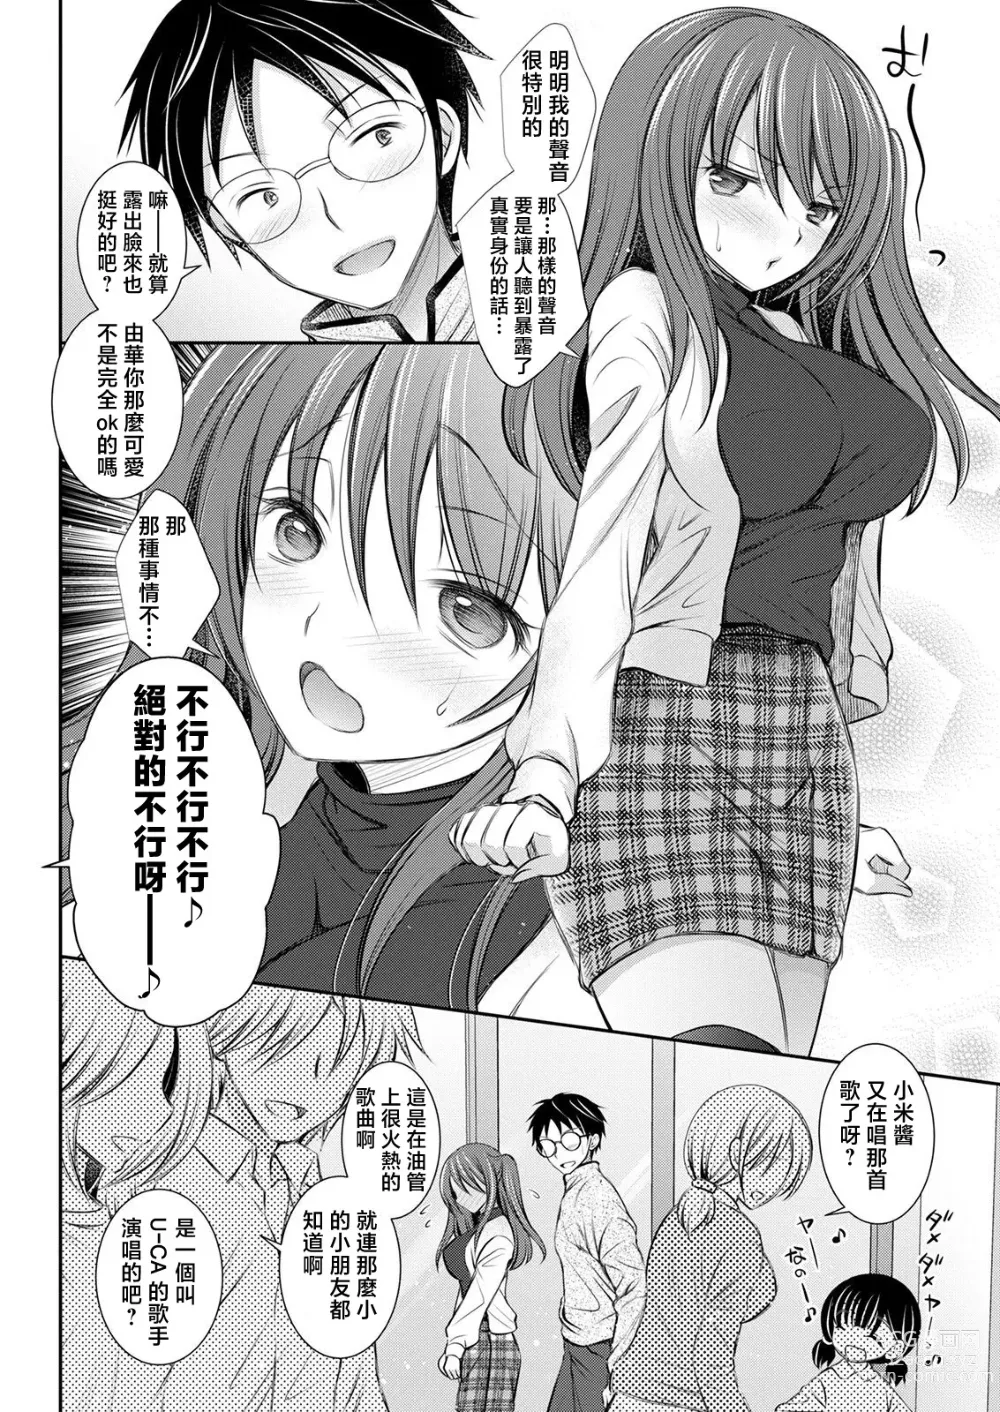 Page 4 of manga Koe o Kikasete